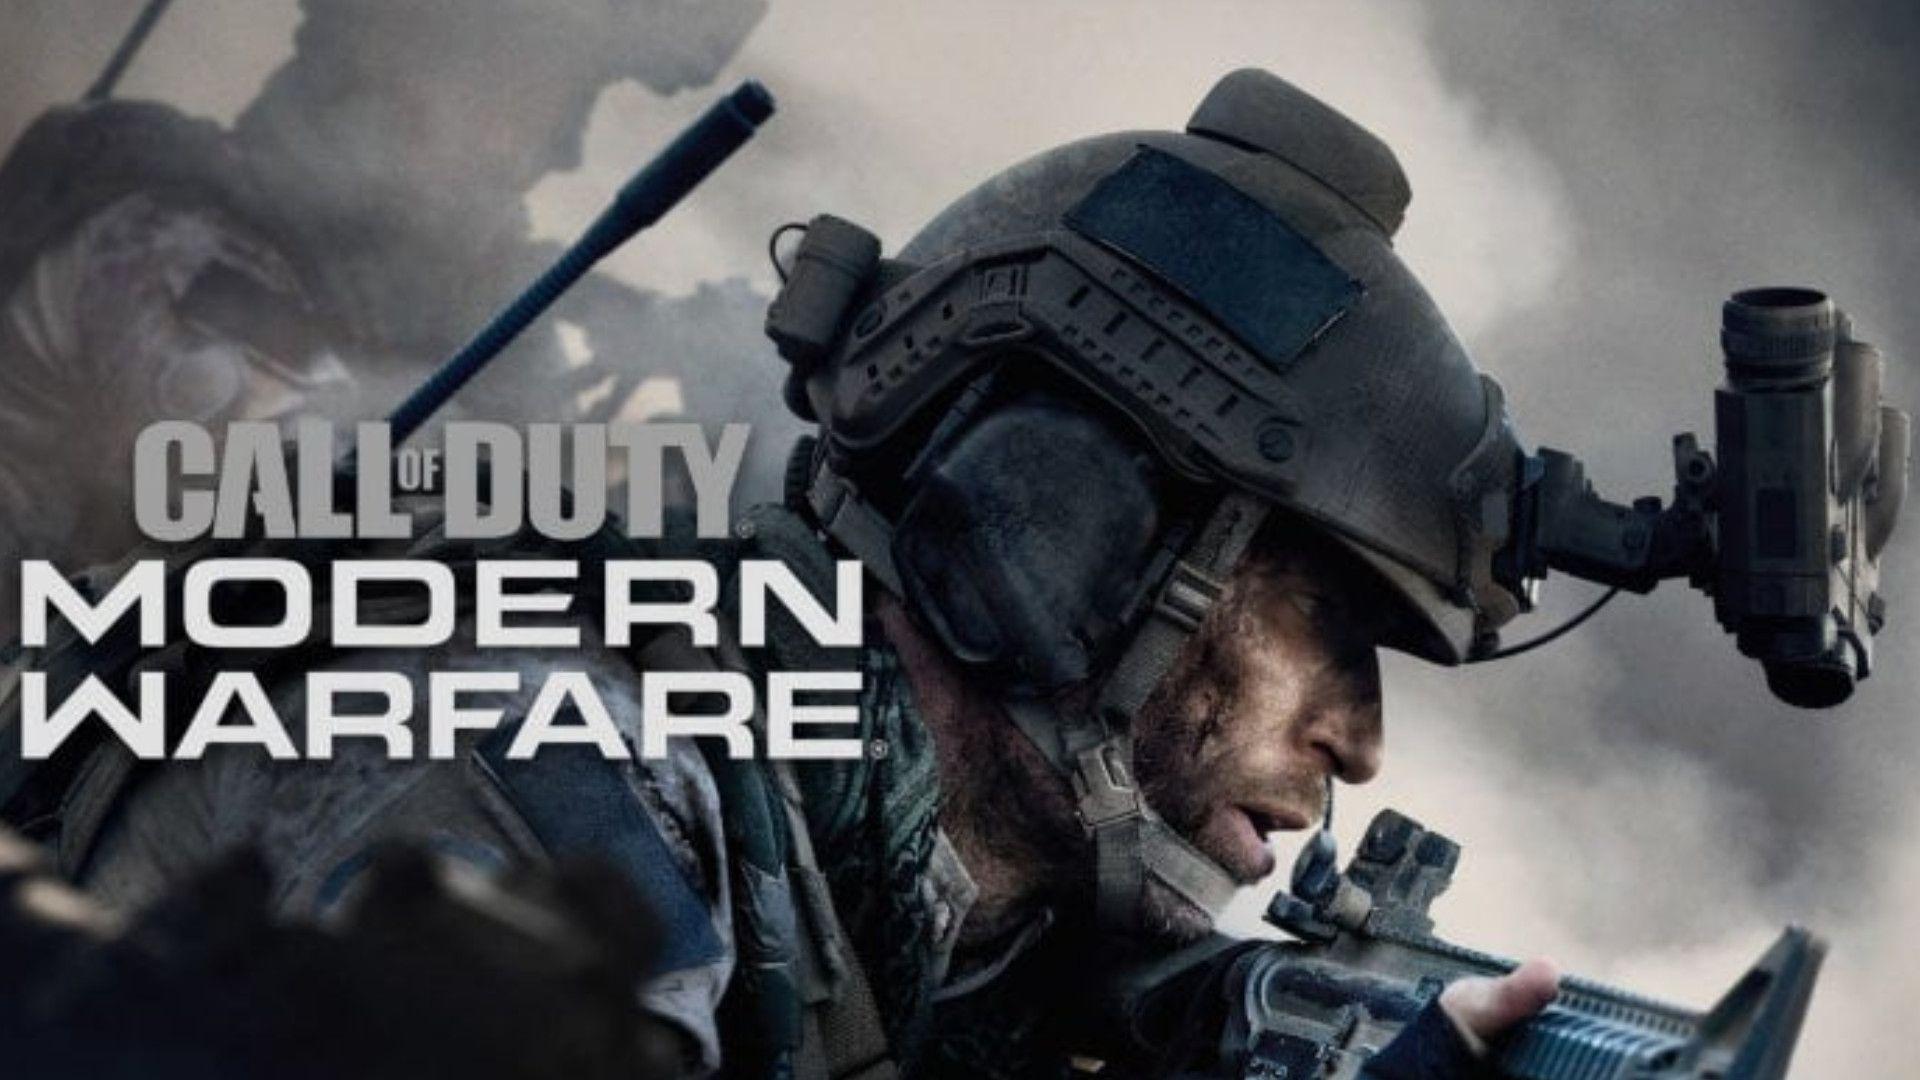 modern warfare 2019 download free